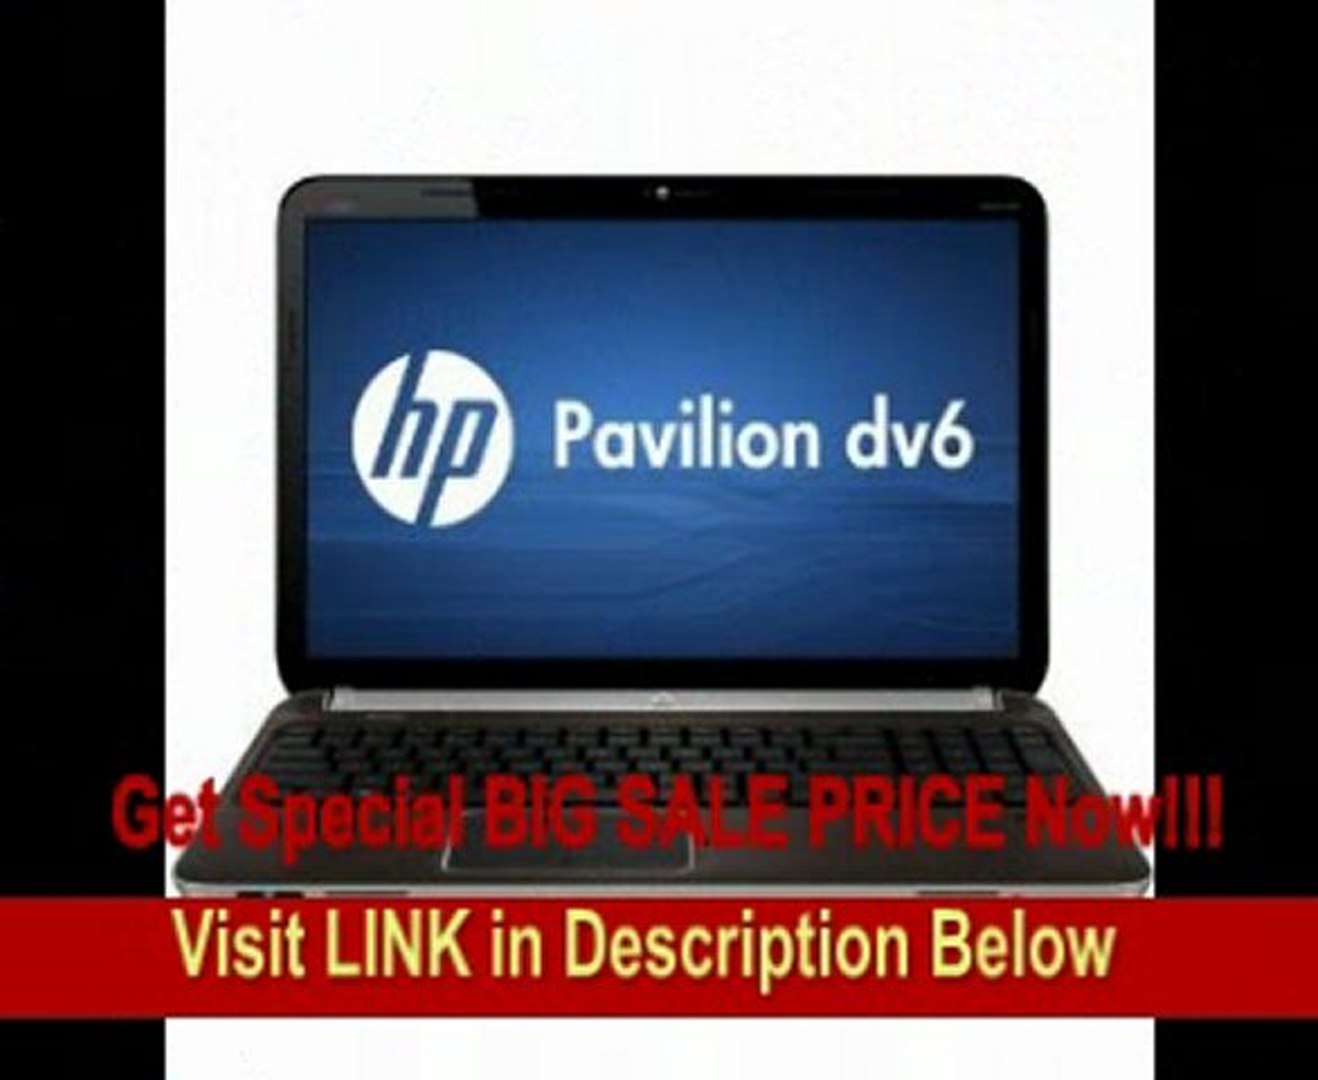 Hp Pavilion Dv6 6047cl 15 6 Laptop 2 Ghz Intel Core I7 2630qm Processor 8 Gb Ram 1 Tb Hard Drive Blu Ray Player Lightscribe Supermulti Dvd Burner Windows 7 Home Premium 64 Bit Video Dailymotion